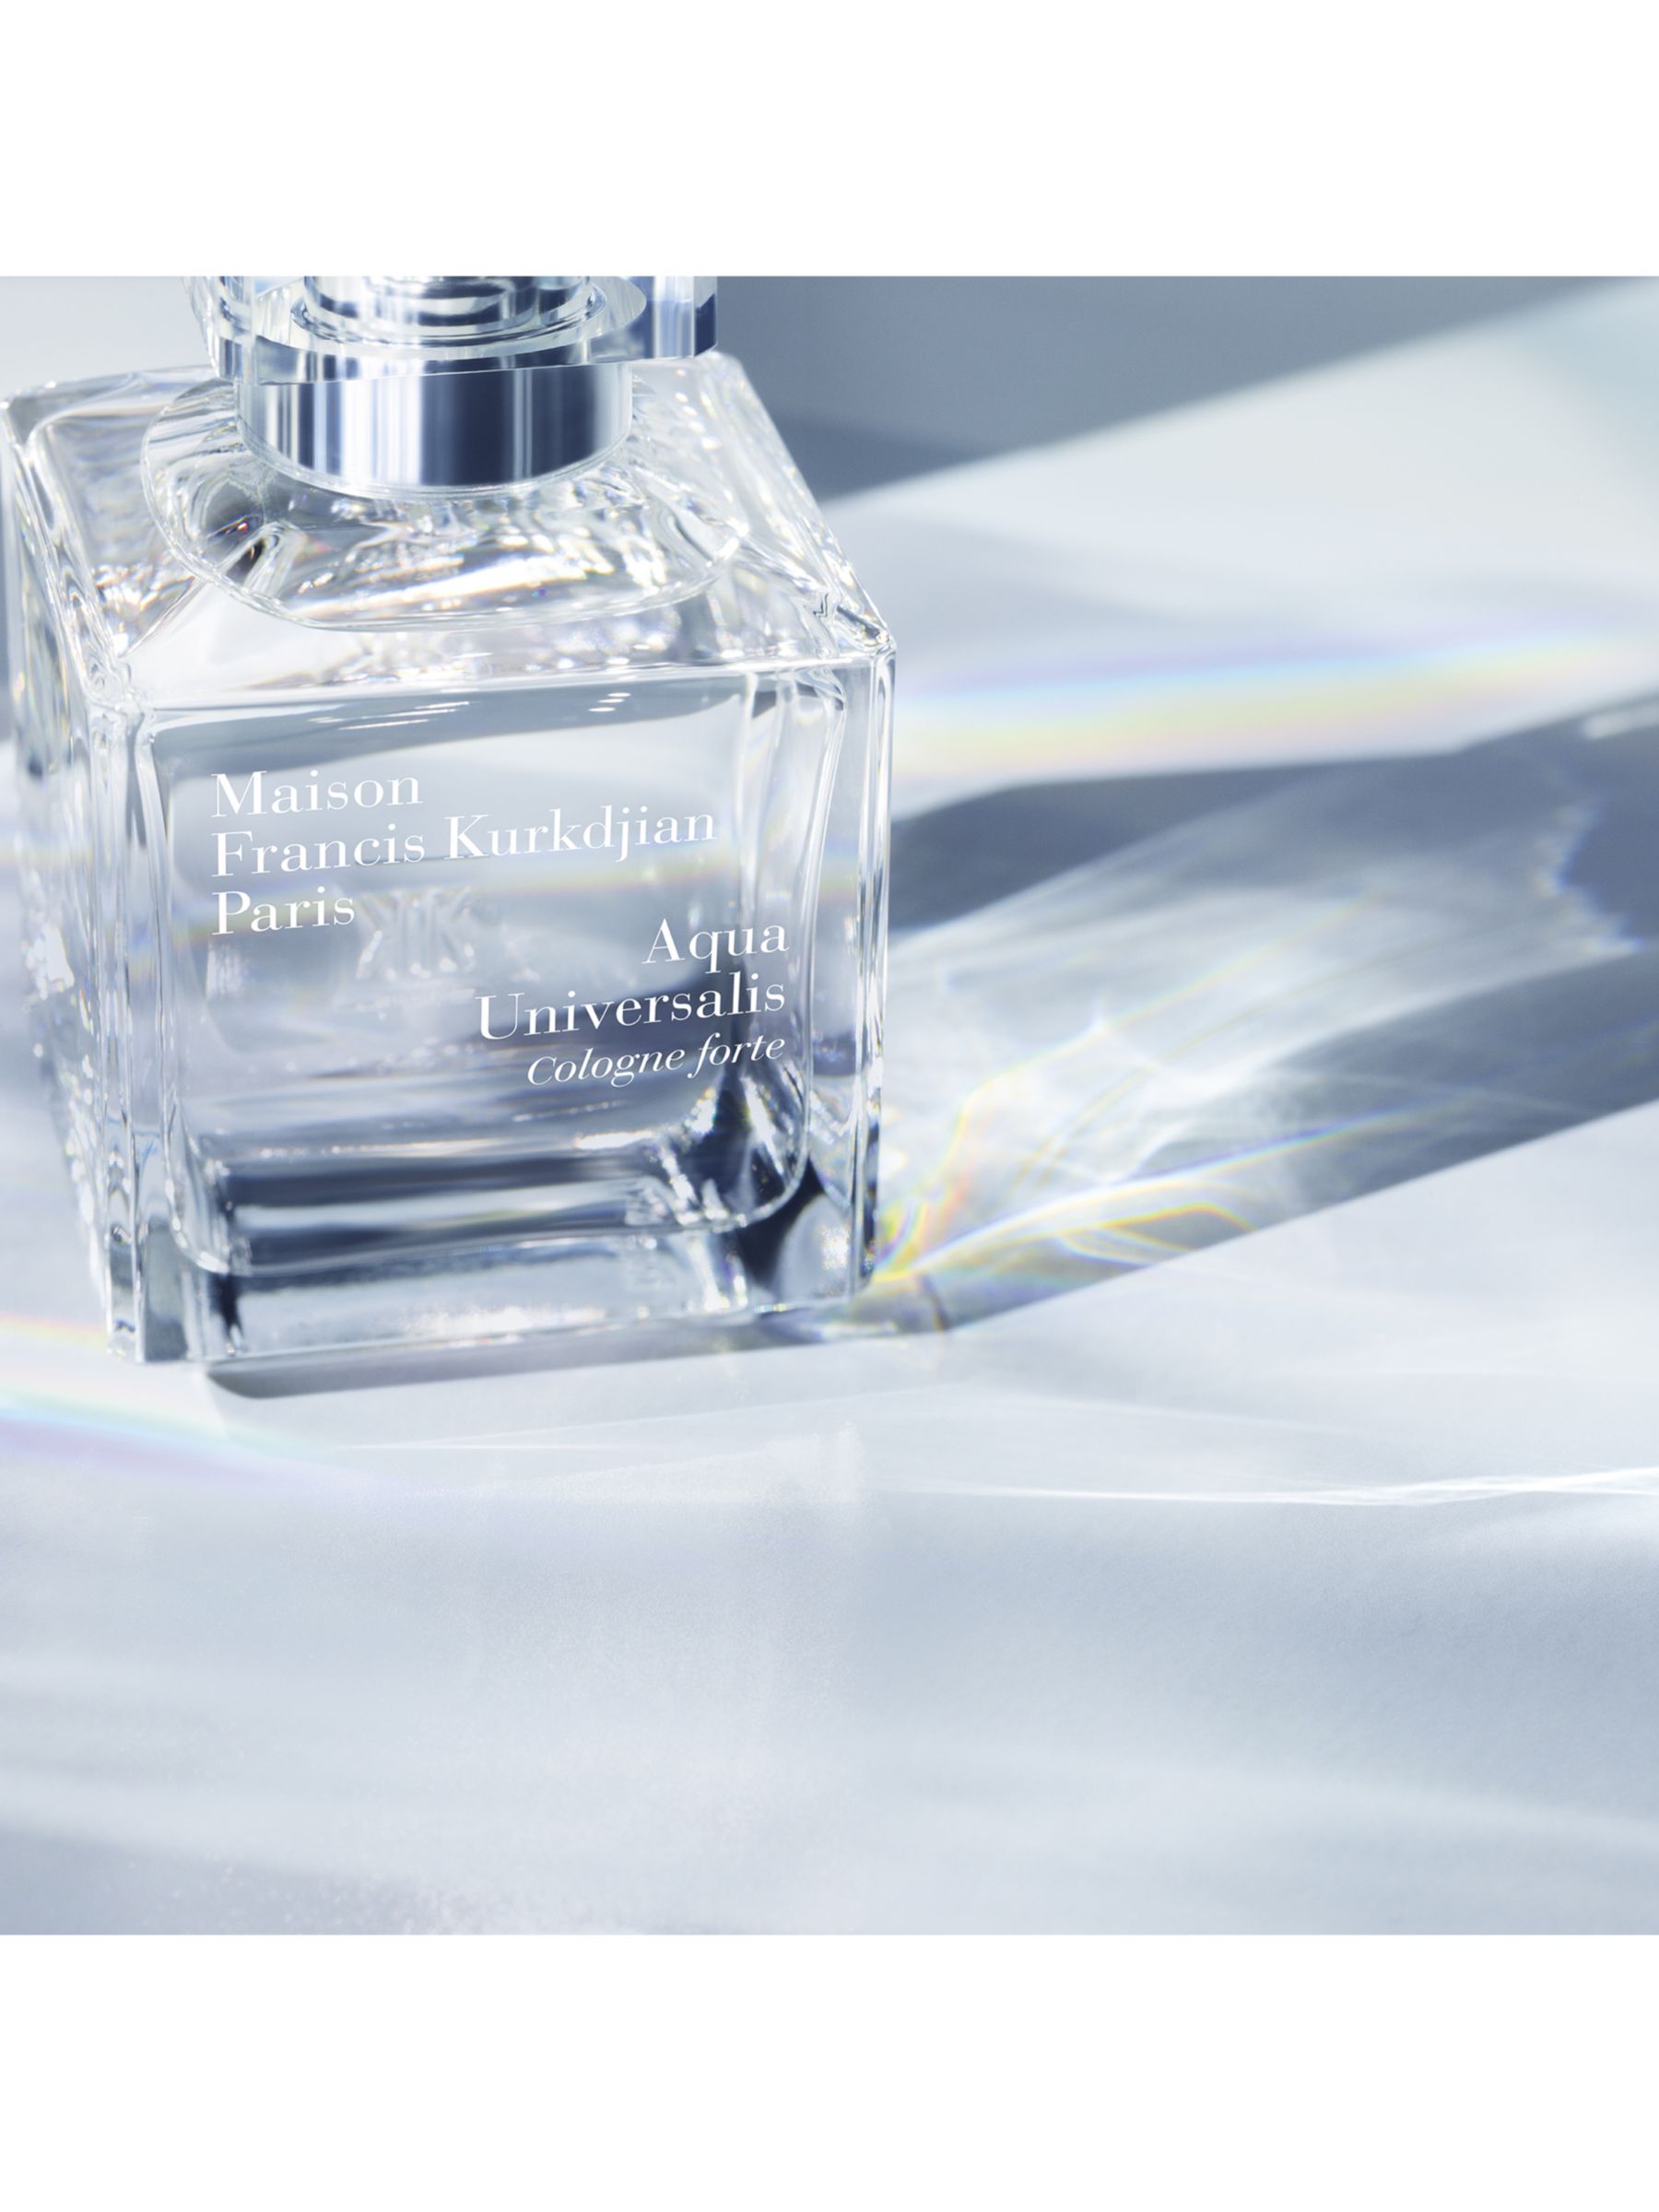 Maison Francis Kurkdjian Aqua Universalis Cologne Forte Eau de Parfum, 70ml